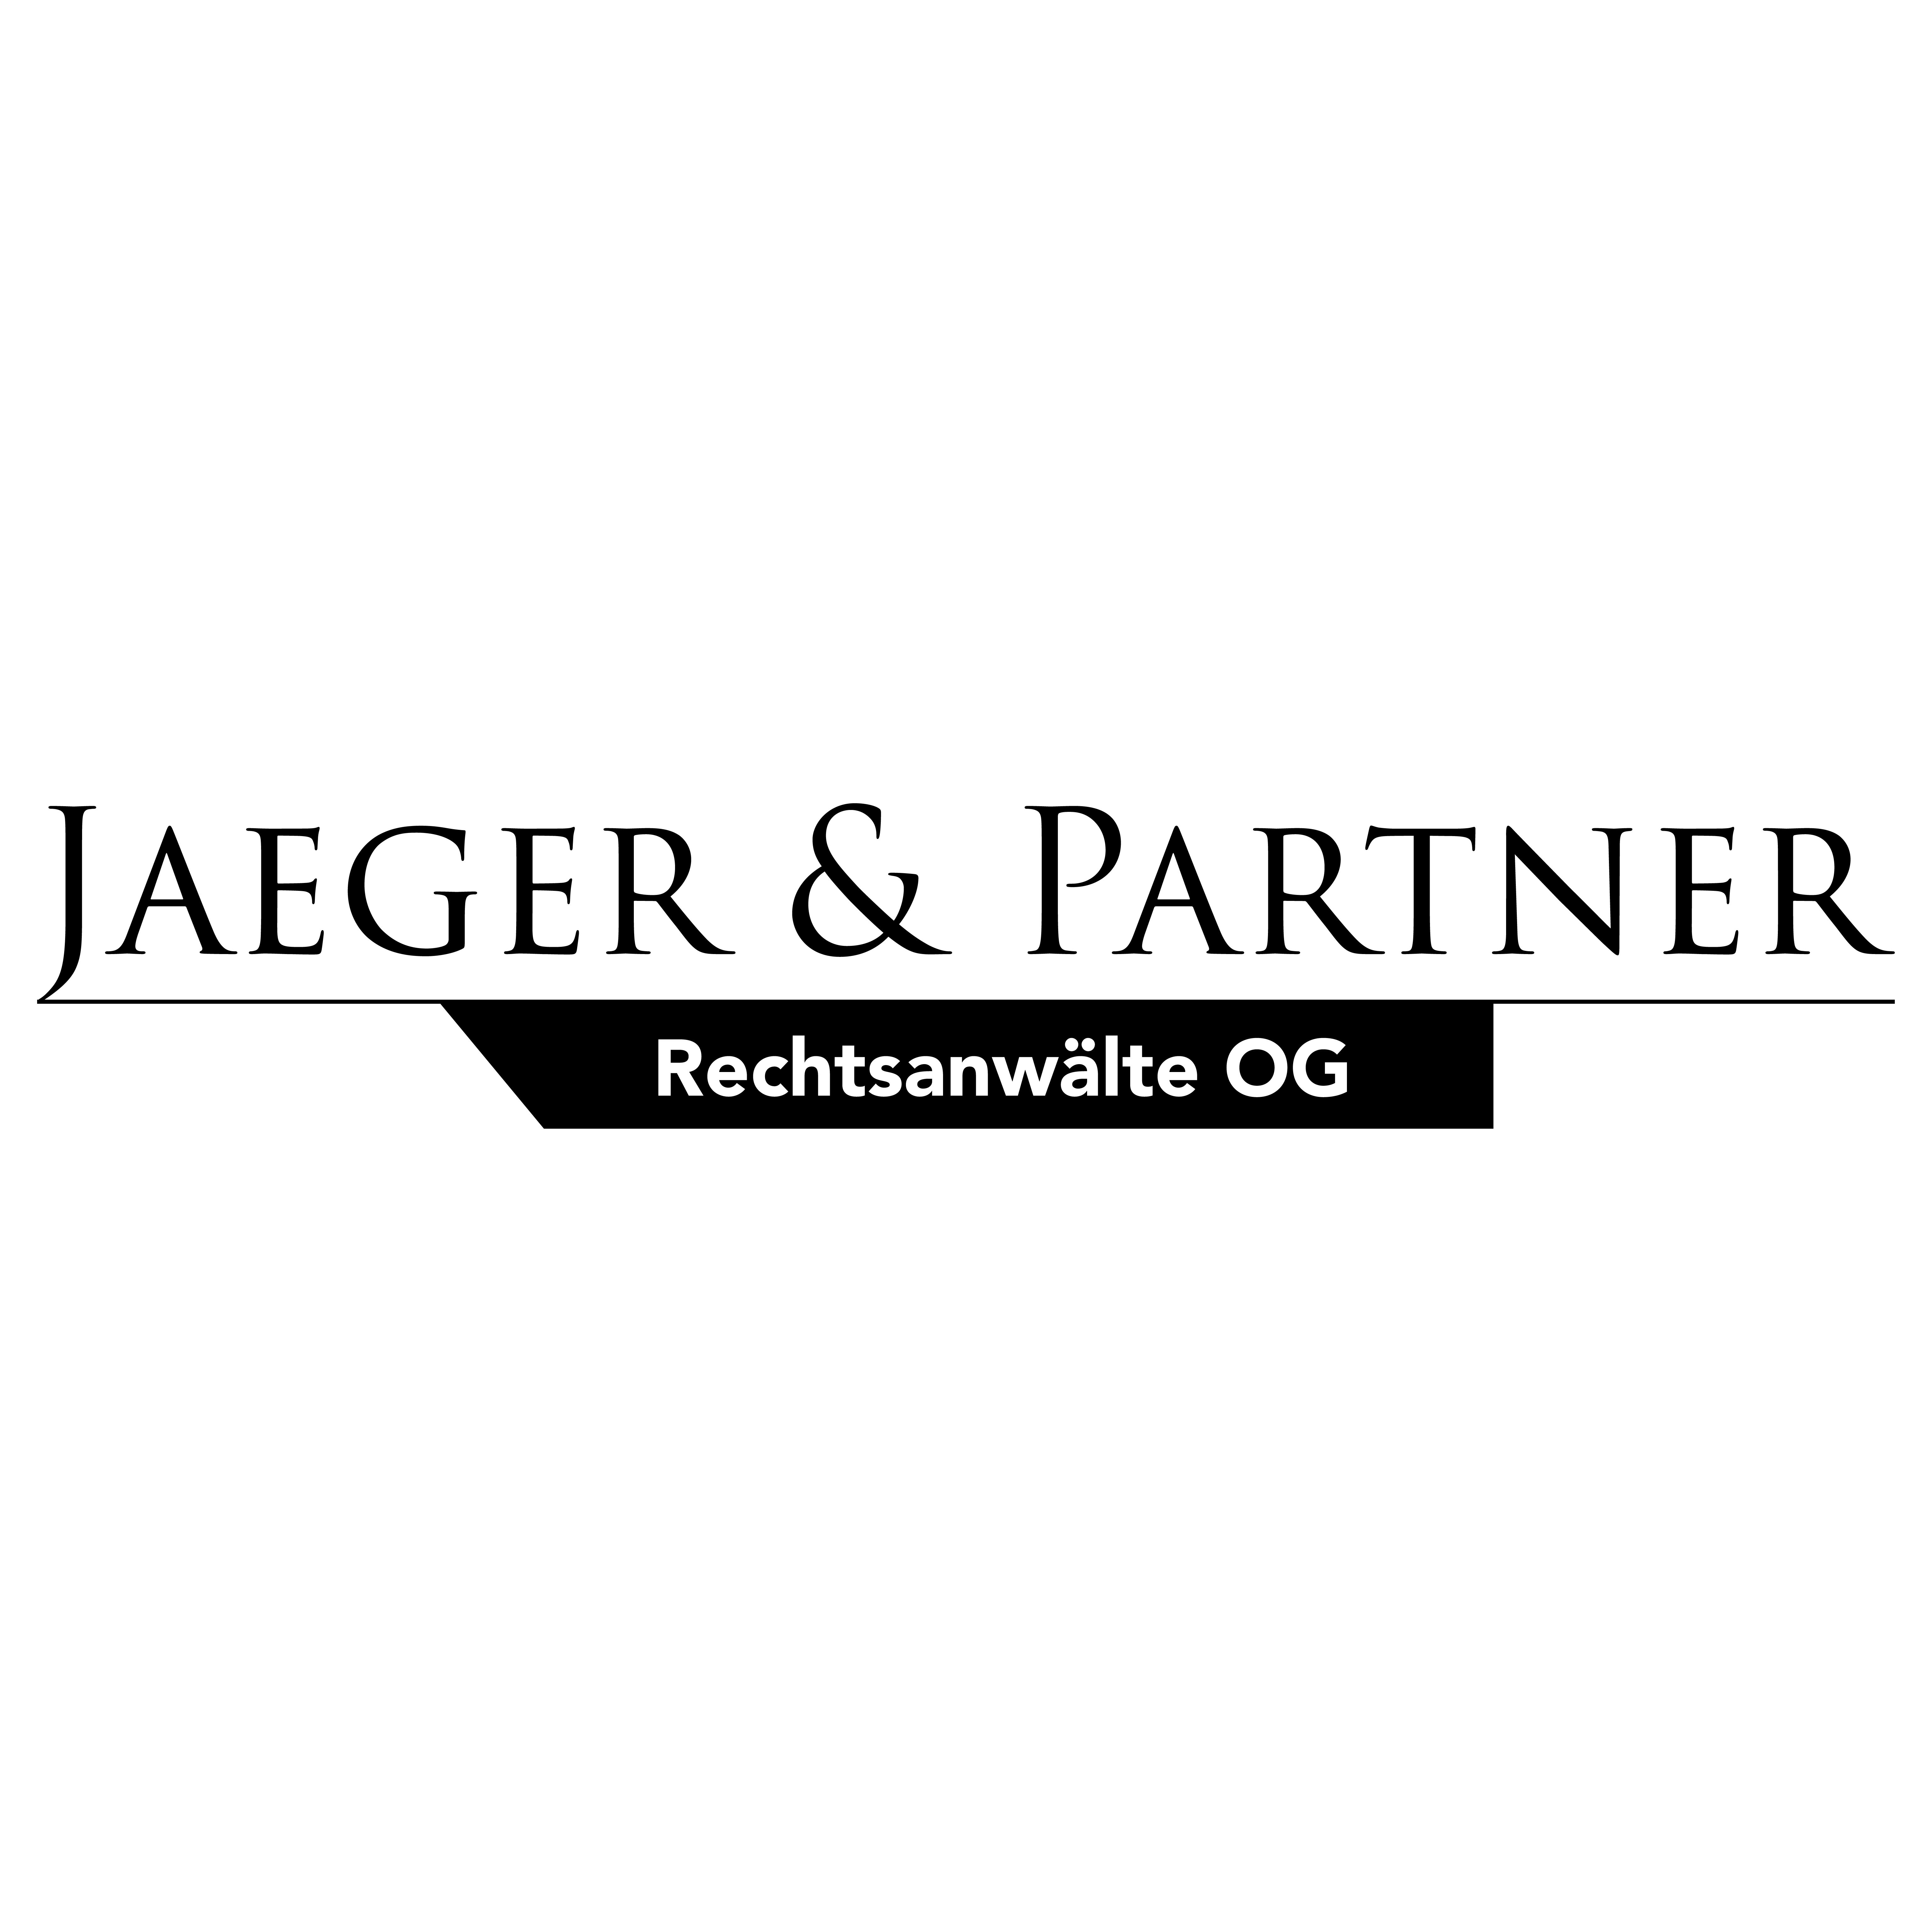 JAEGER & Partner Rechtsanwälte OG - Law Firm - Linz - 0732 7733330 Austria | ShowMeLocal.com